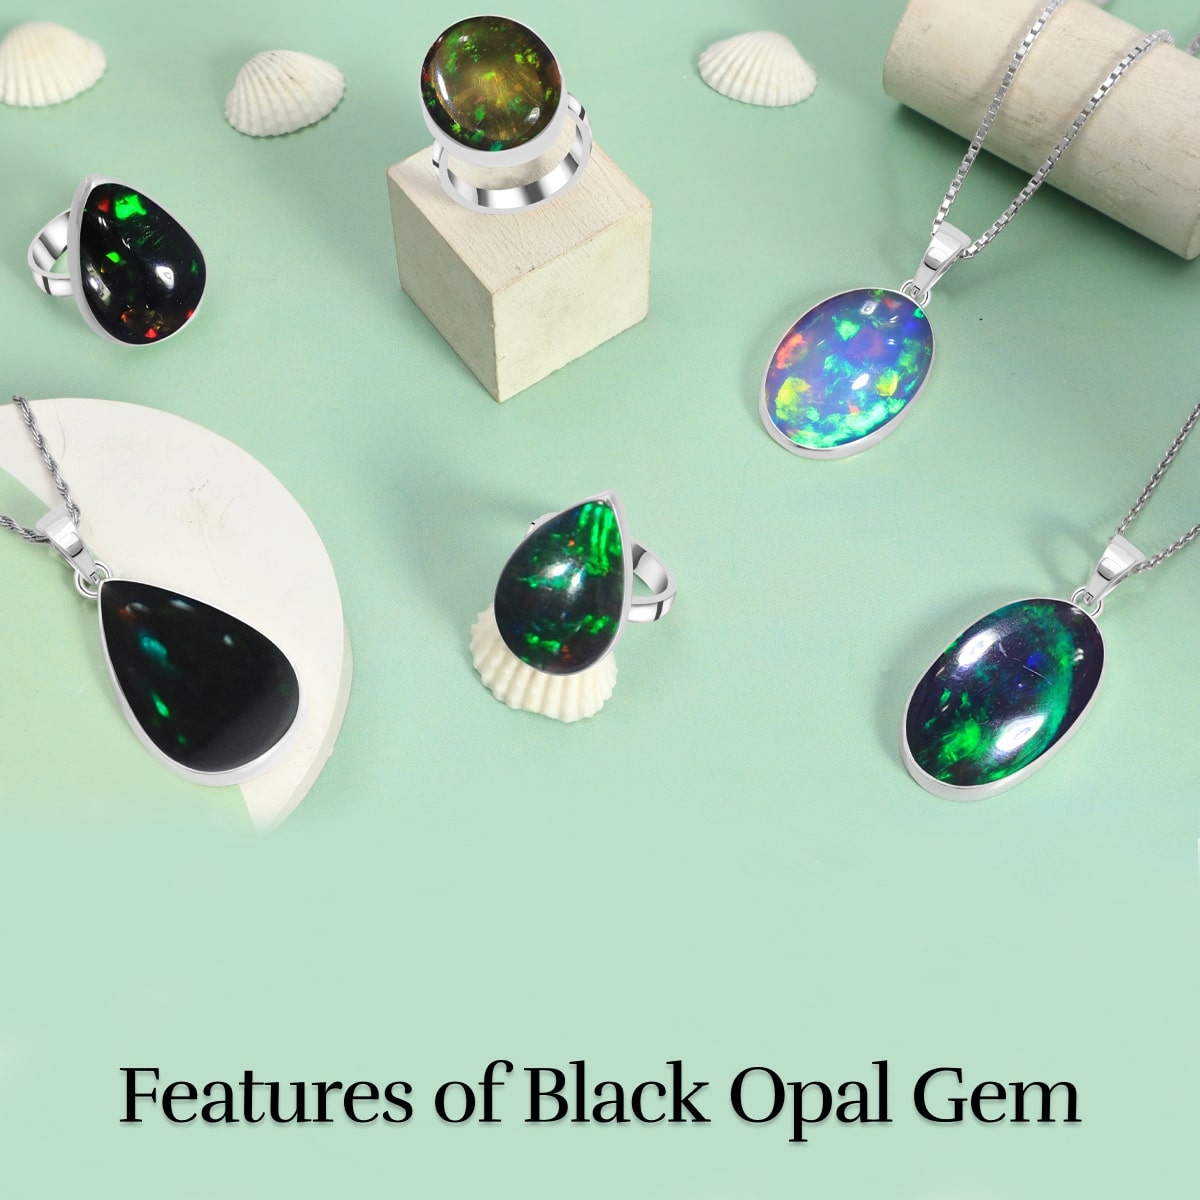 Physical Properties of Black Opal Gem